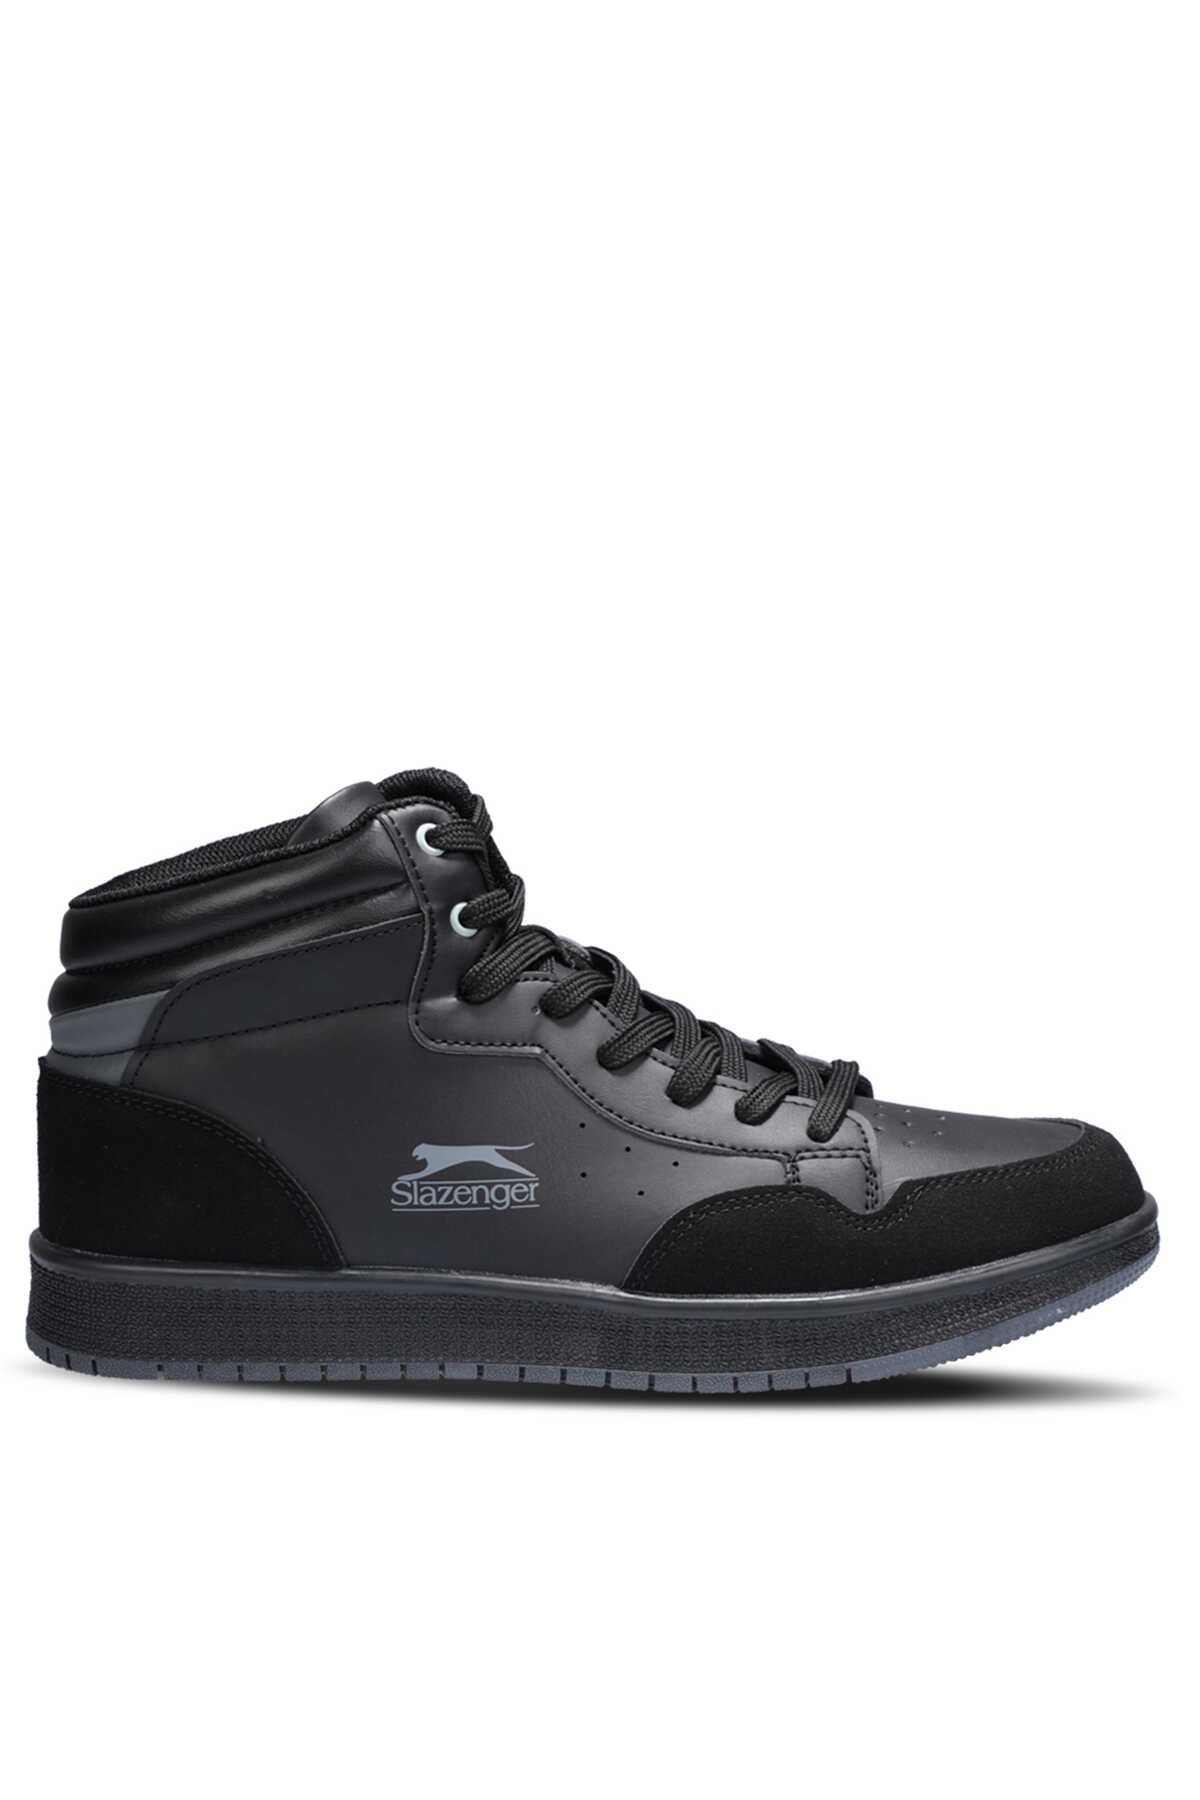 Slazenger - PACE Sneaker Erkek Ayakkabı Siyah / Siyah